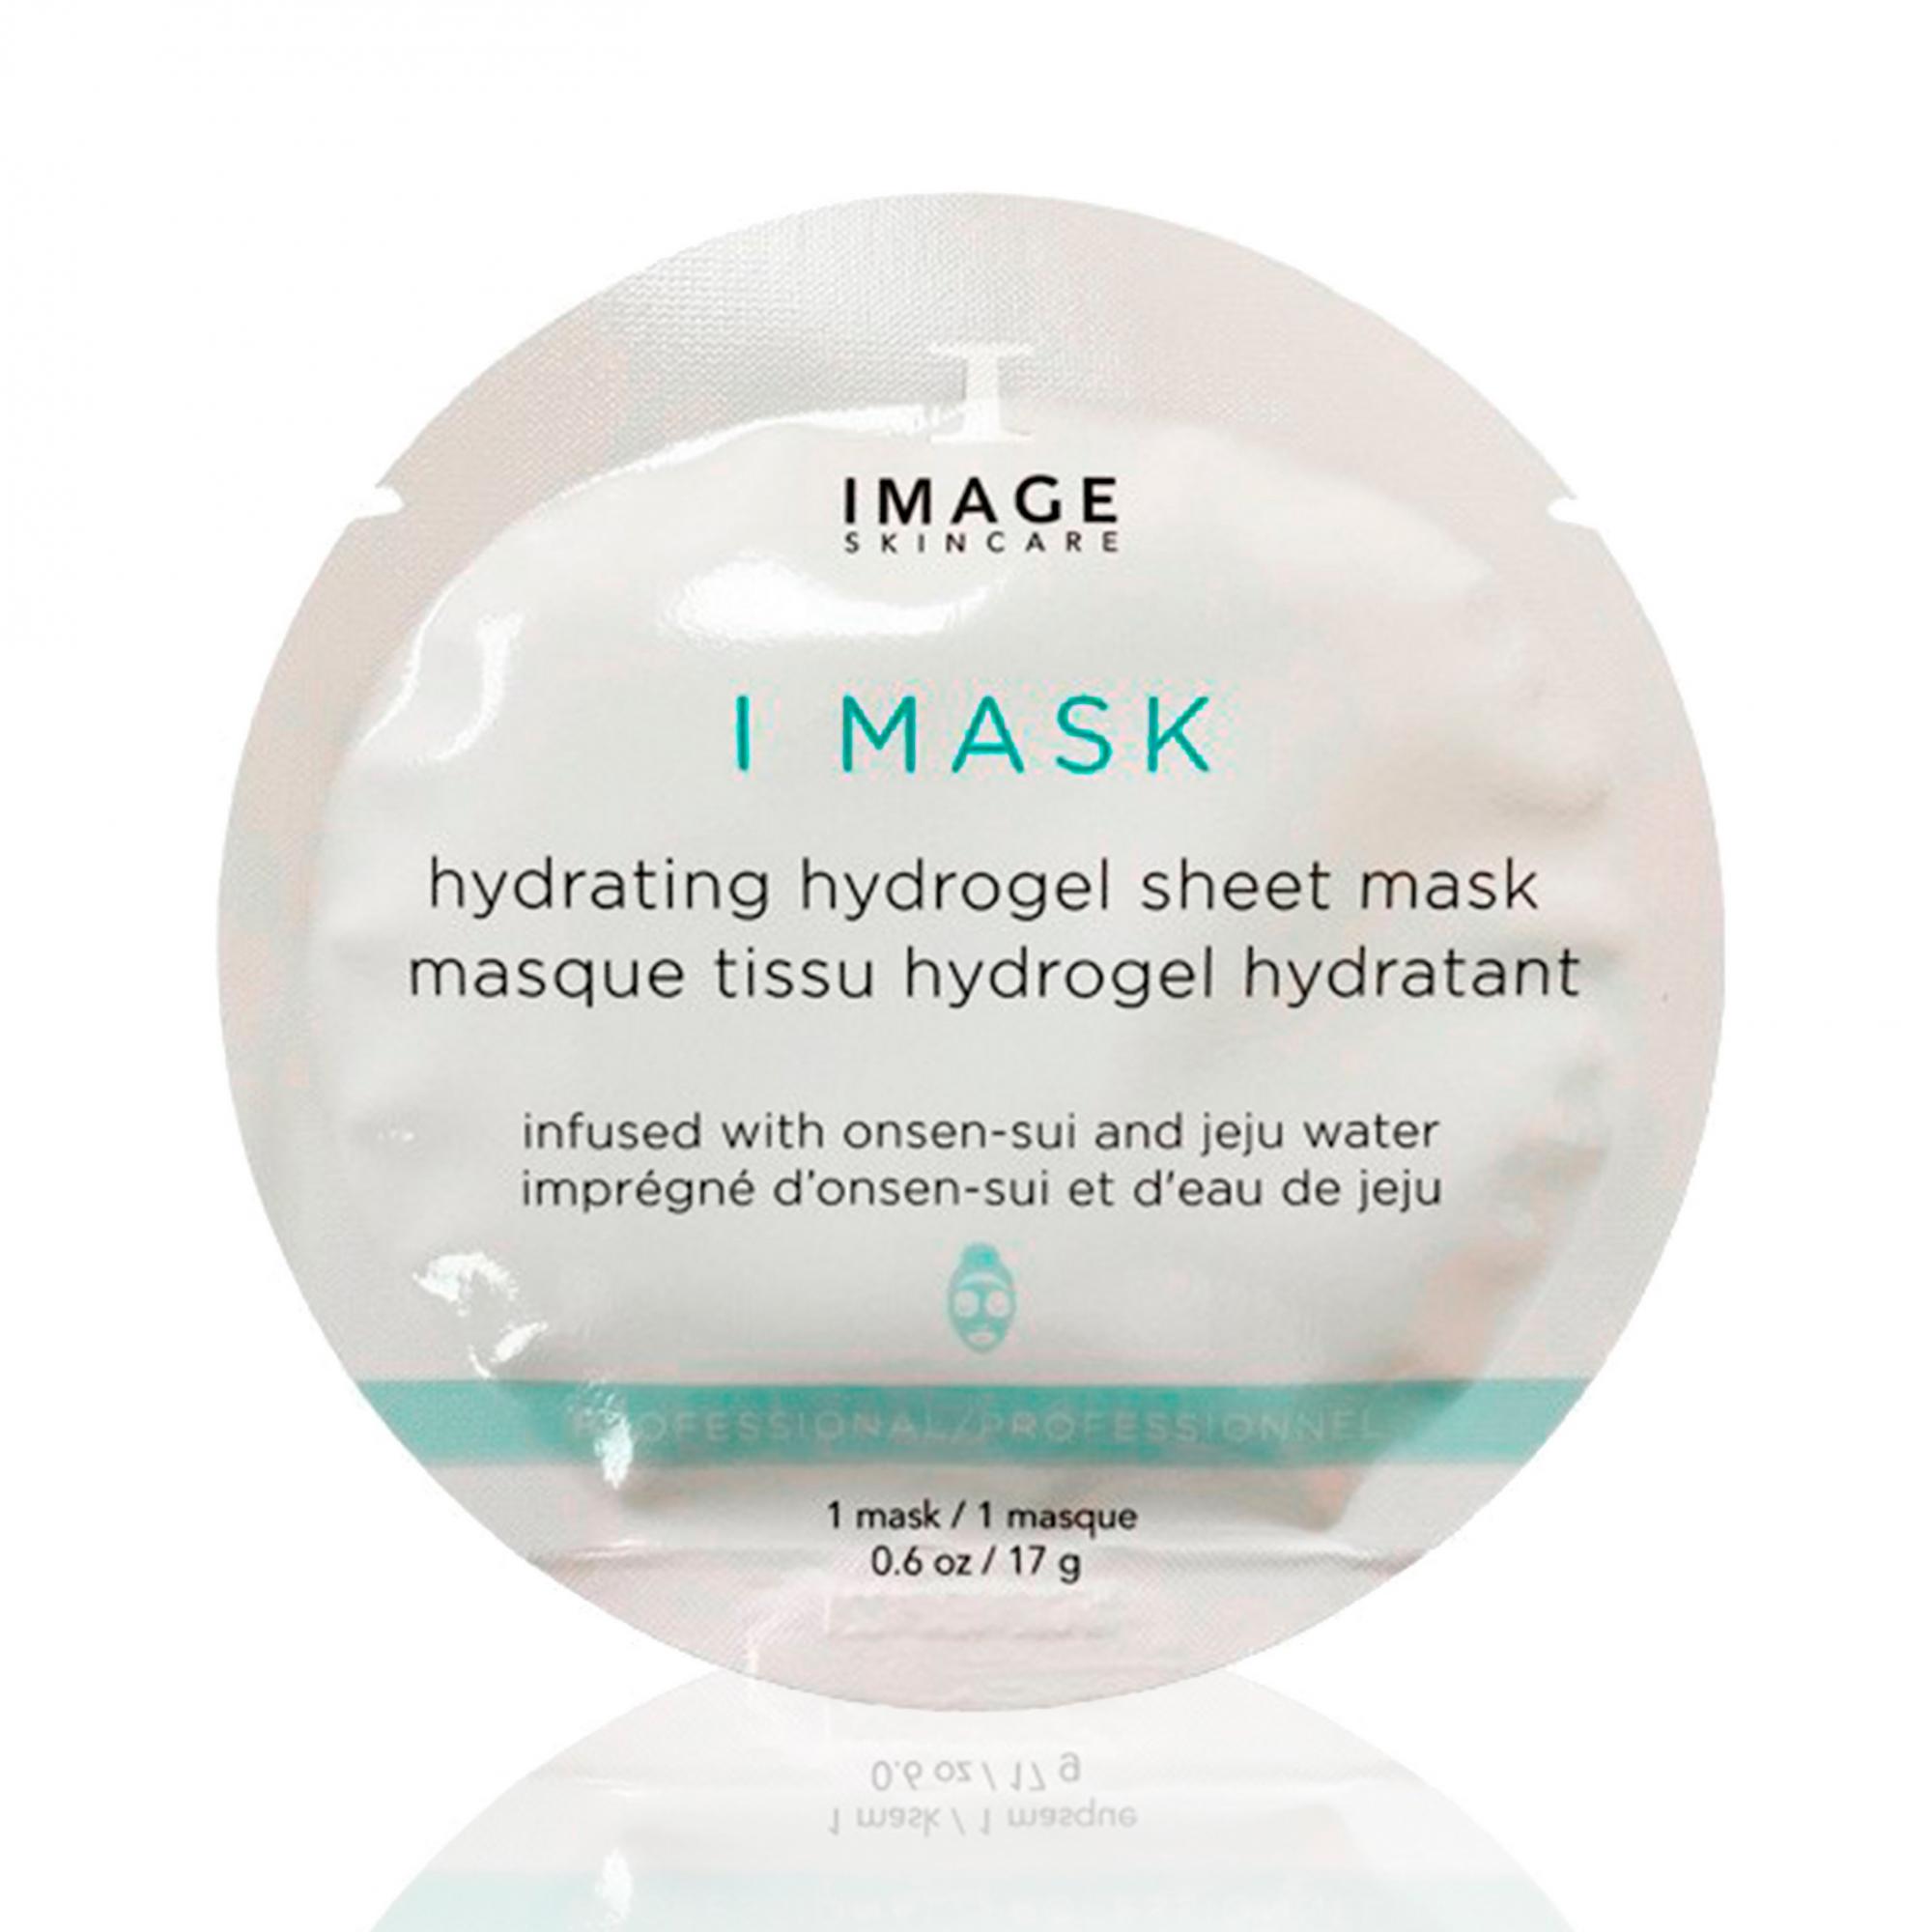 Biodance маска для лица купить. I Mask Hydrating Hydrogel Sheet Mask. Image Skincare гидрогелевая маска. Image Skincare i Mask Anti-Aging Hydrogel. Image Mask Biomolecular Hydrating маска гидрогелевая.